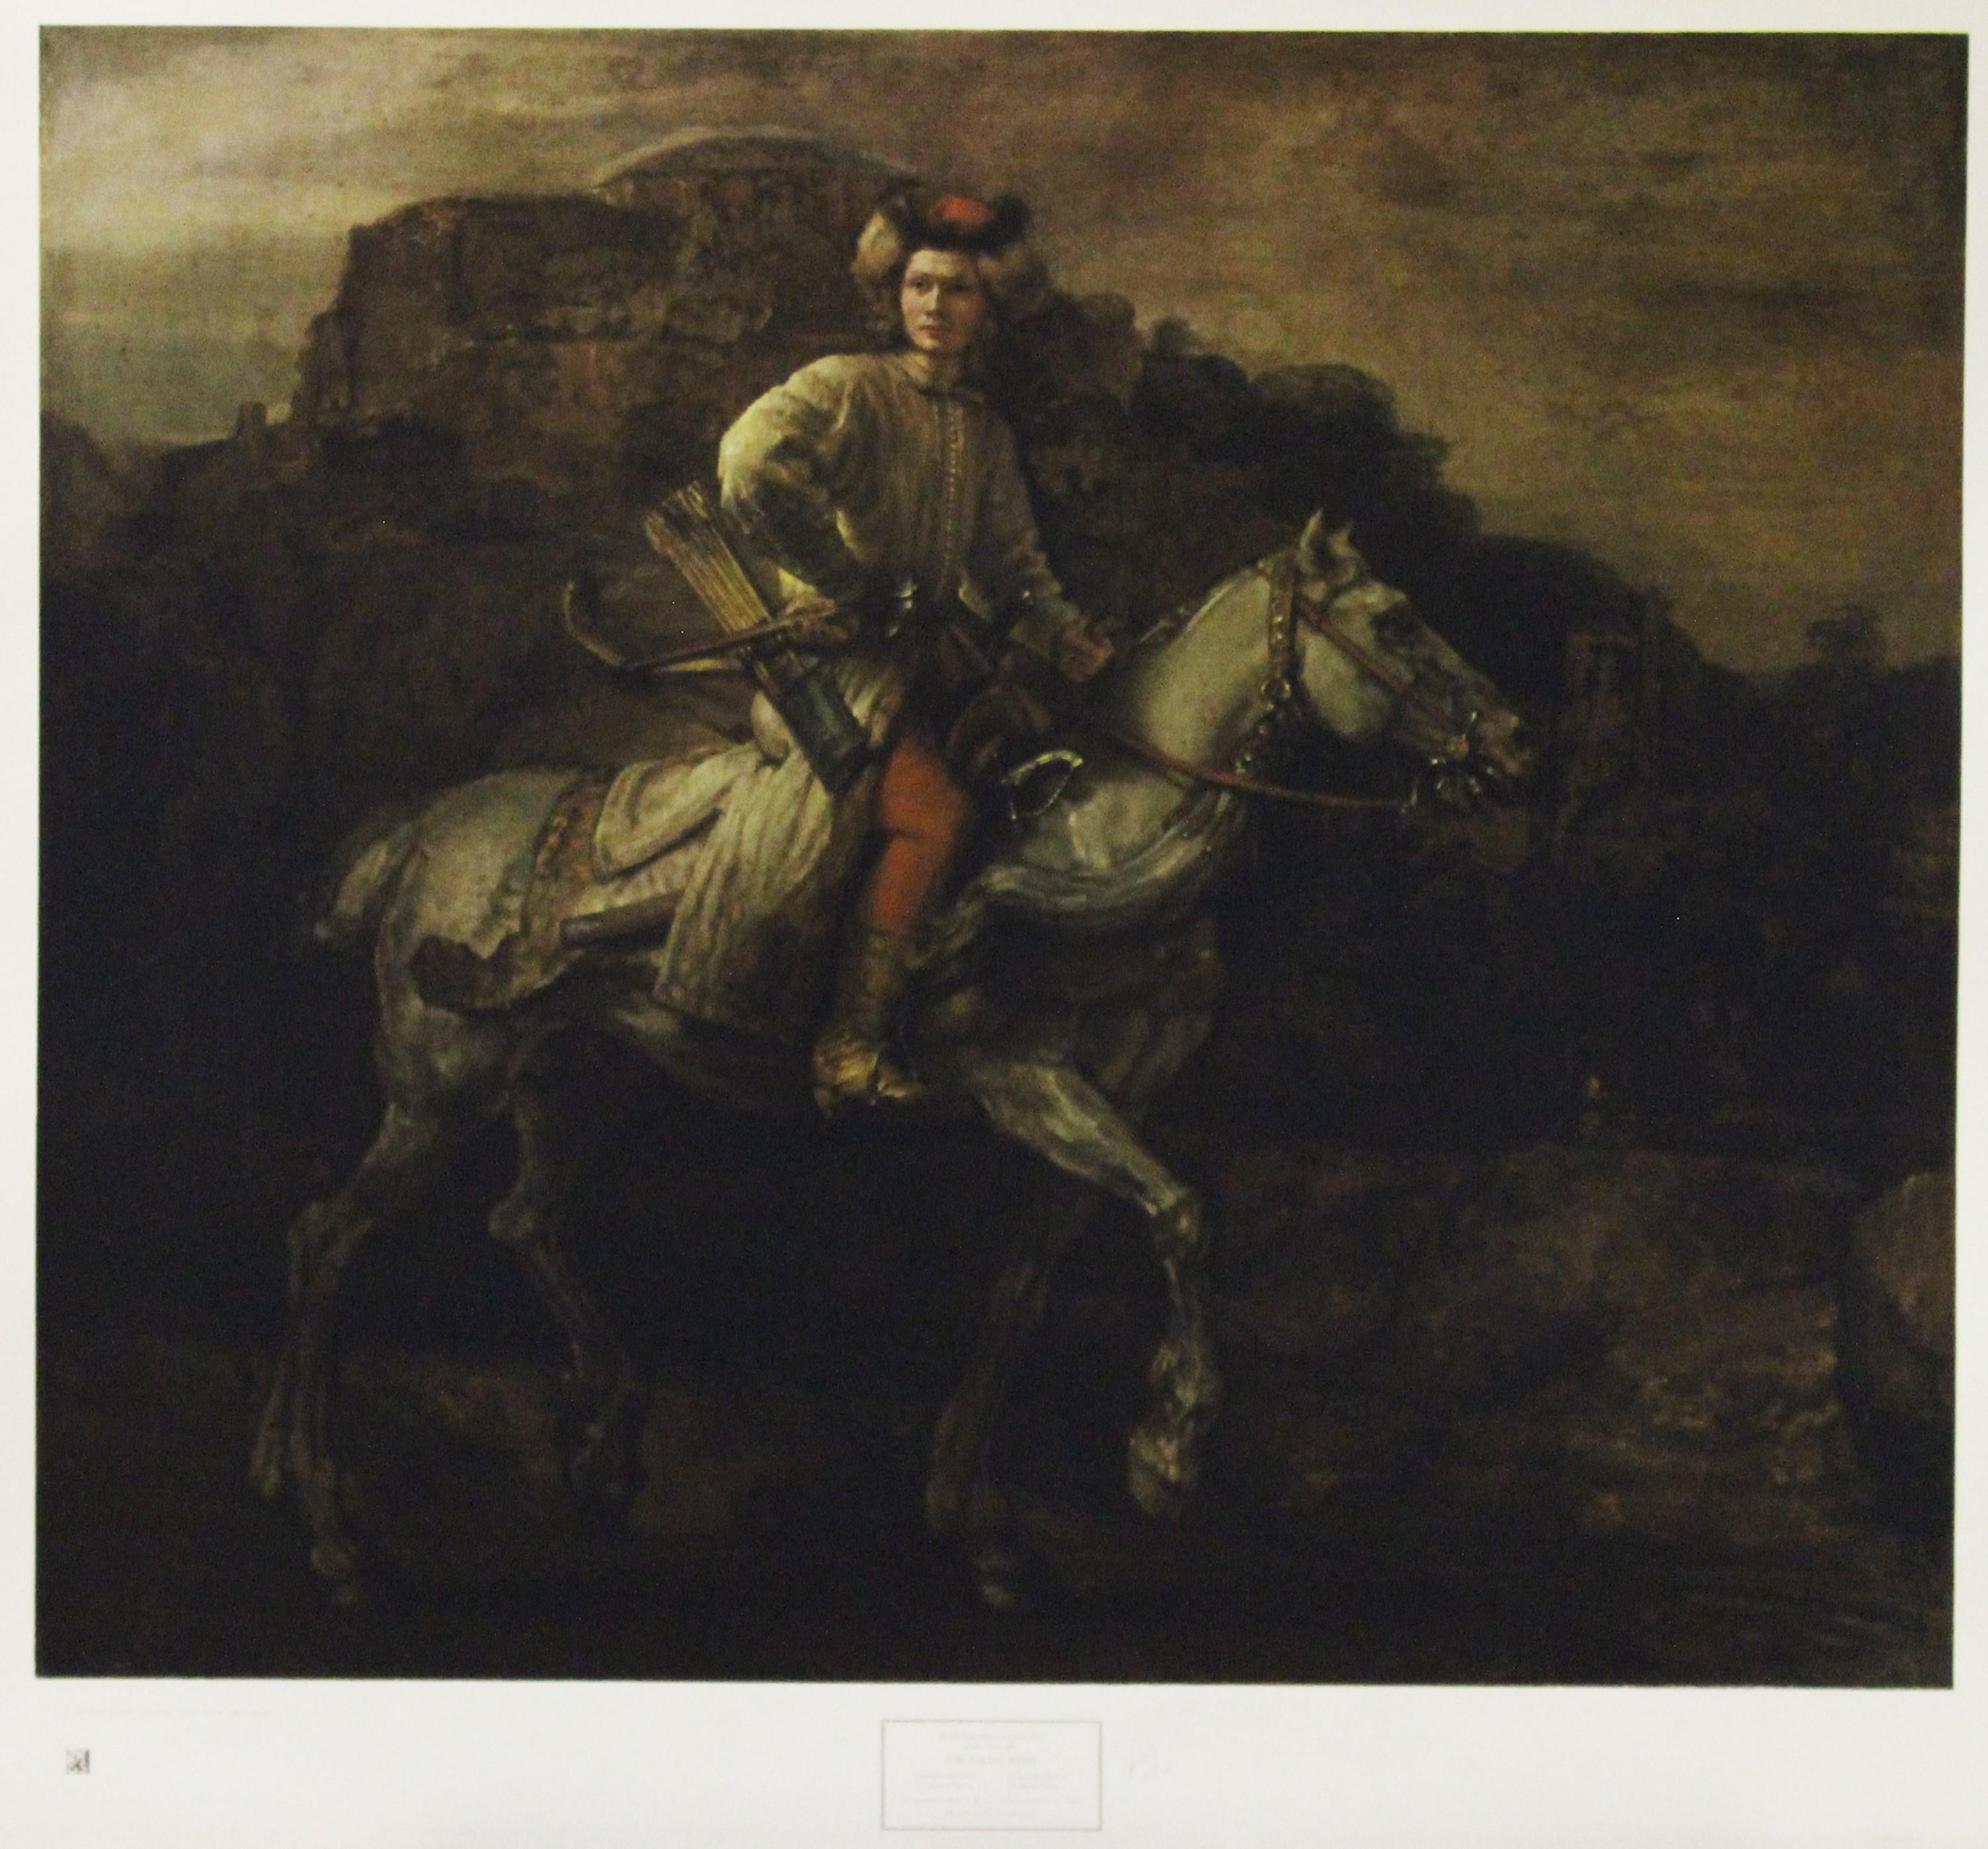 (After) Rembrandt van Rijn  Portrait Print - The Polish Rider-Poster. New York Graphic Society, Ltd. 